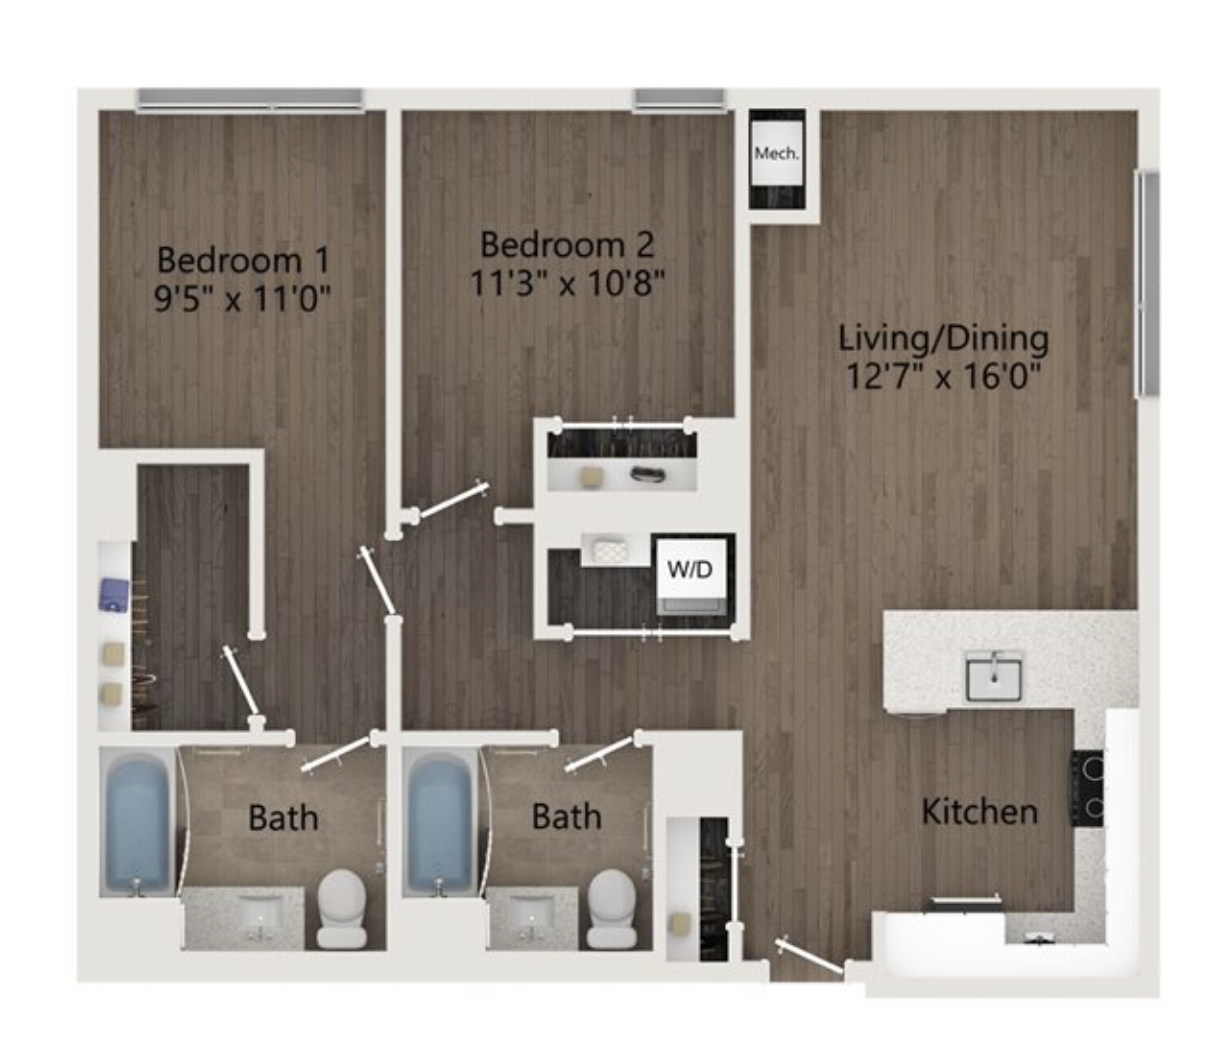 Sample two-bedroom floor plan